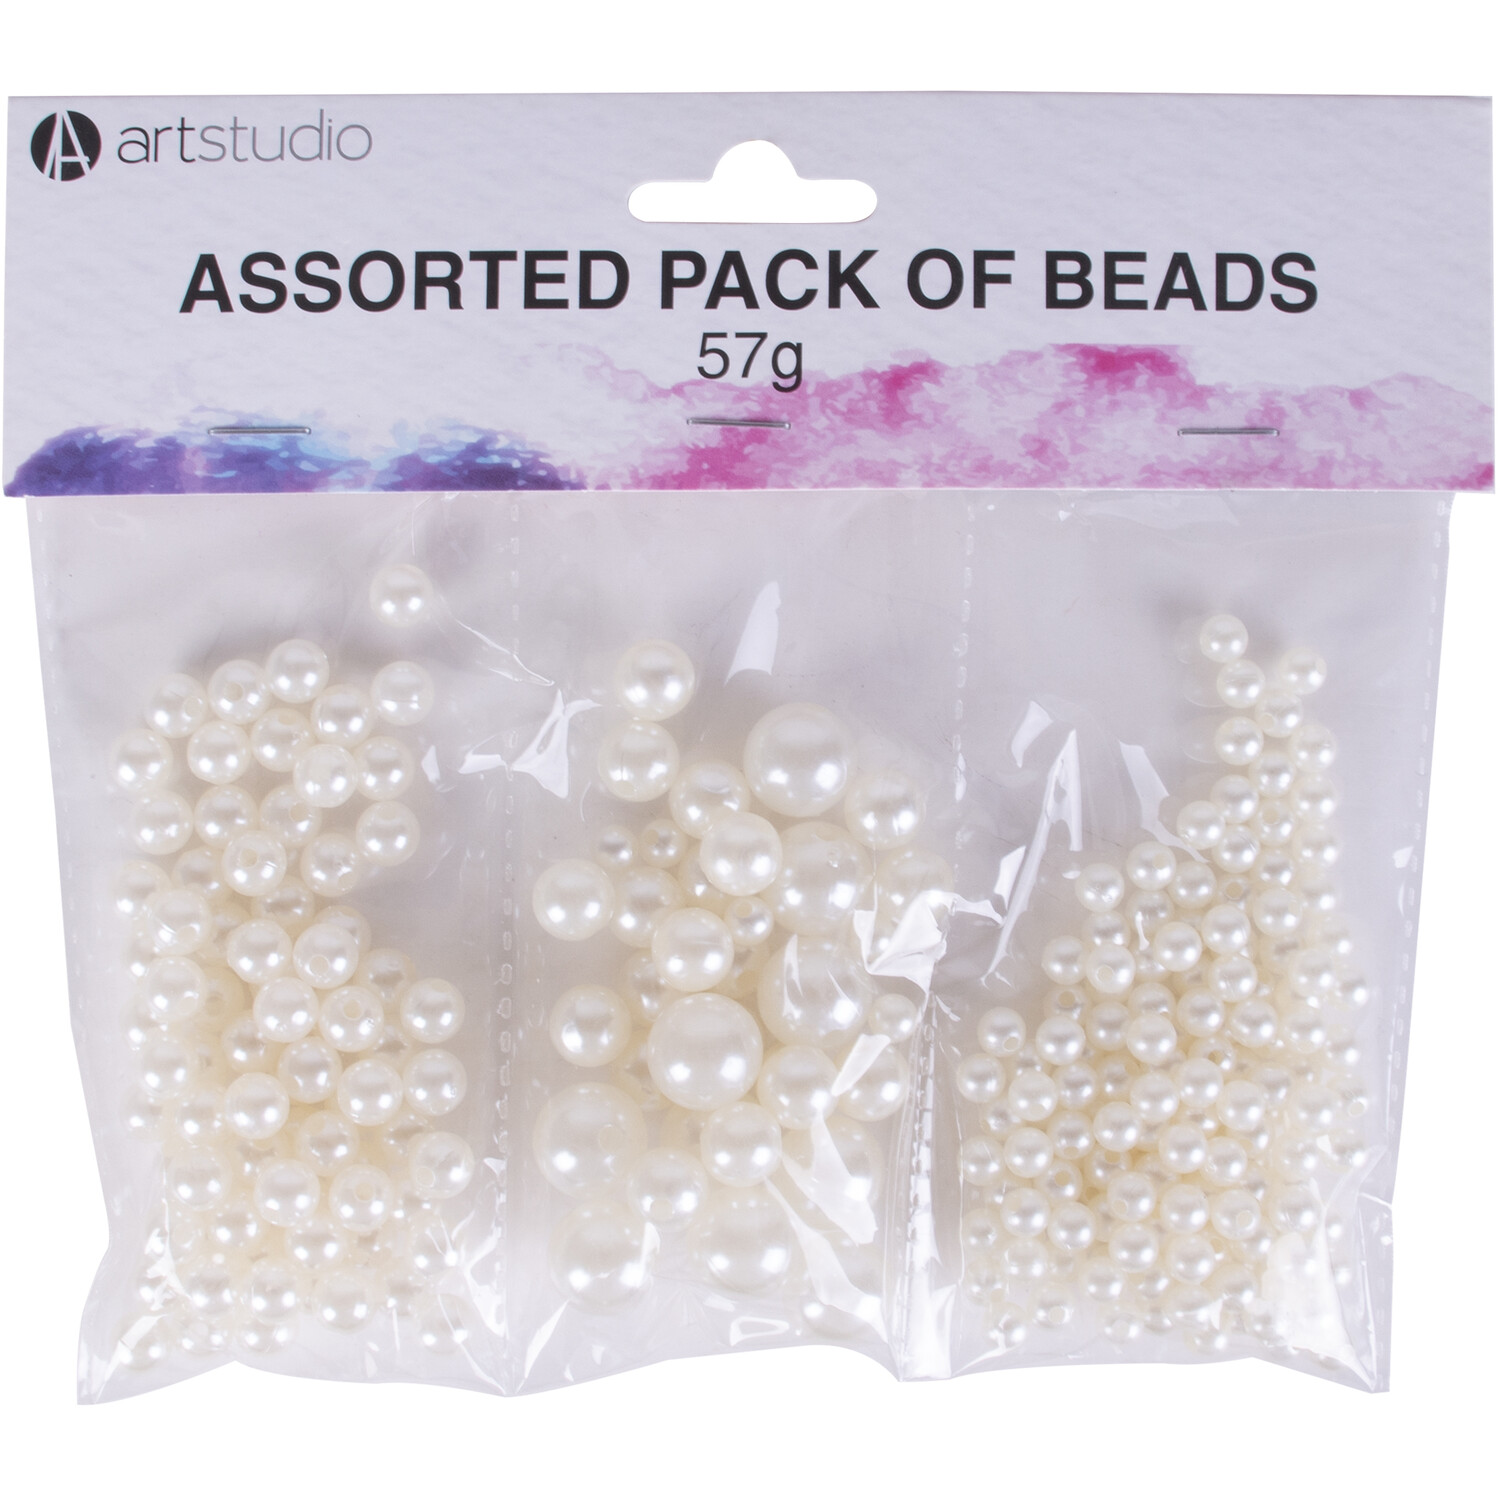 Art Studio Assorted Pack of Beads - White Image